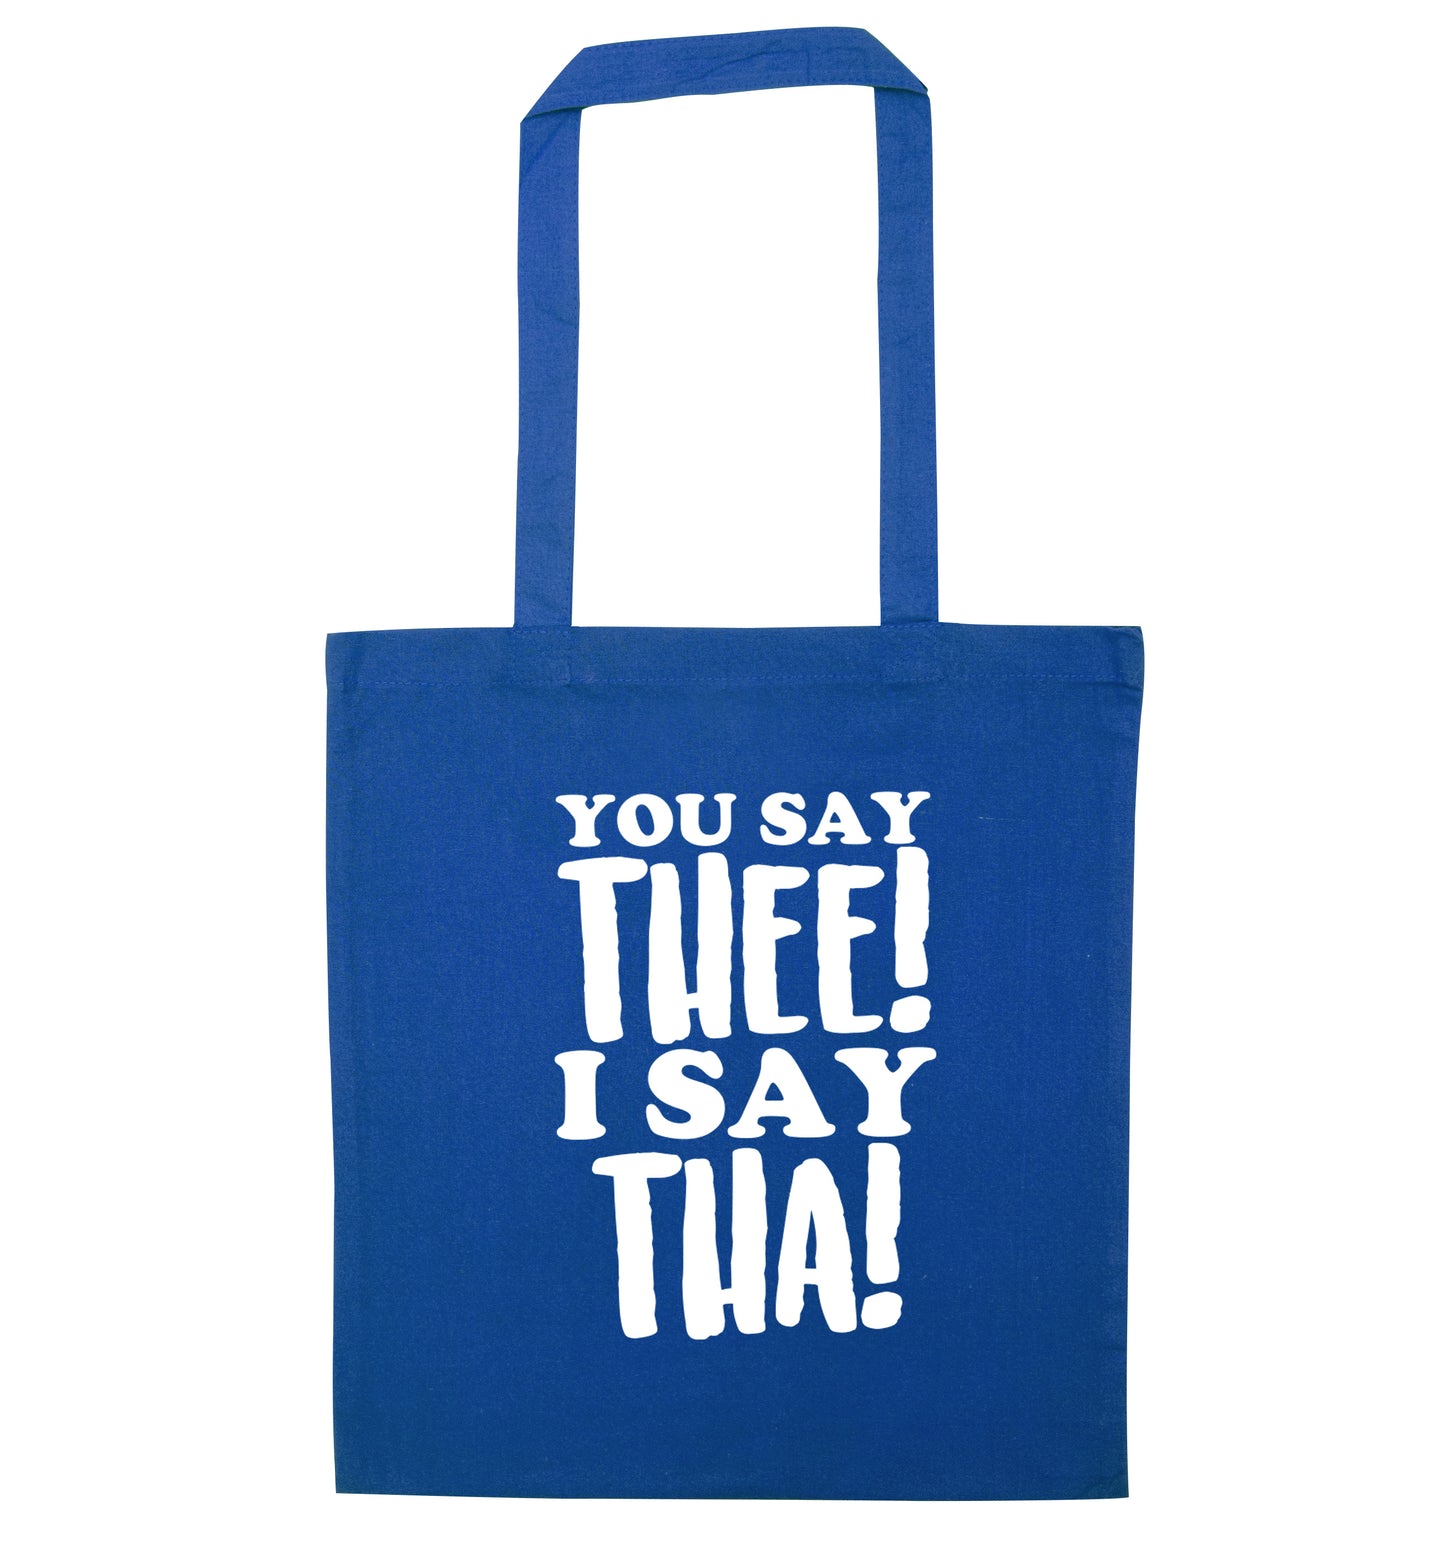 You say thee I say tha blue tote bag